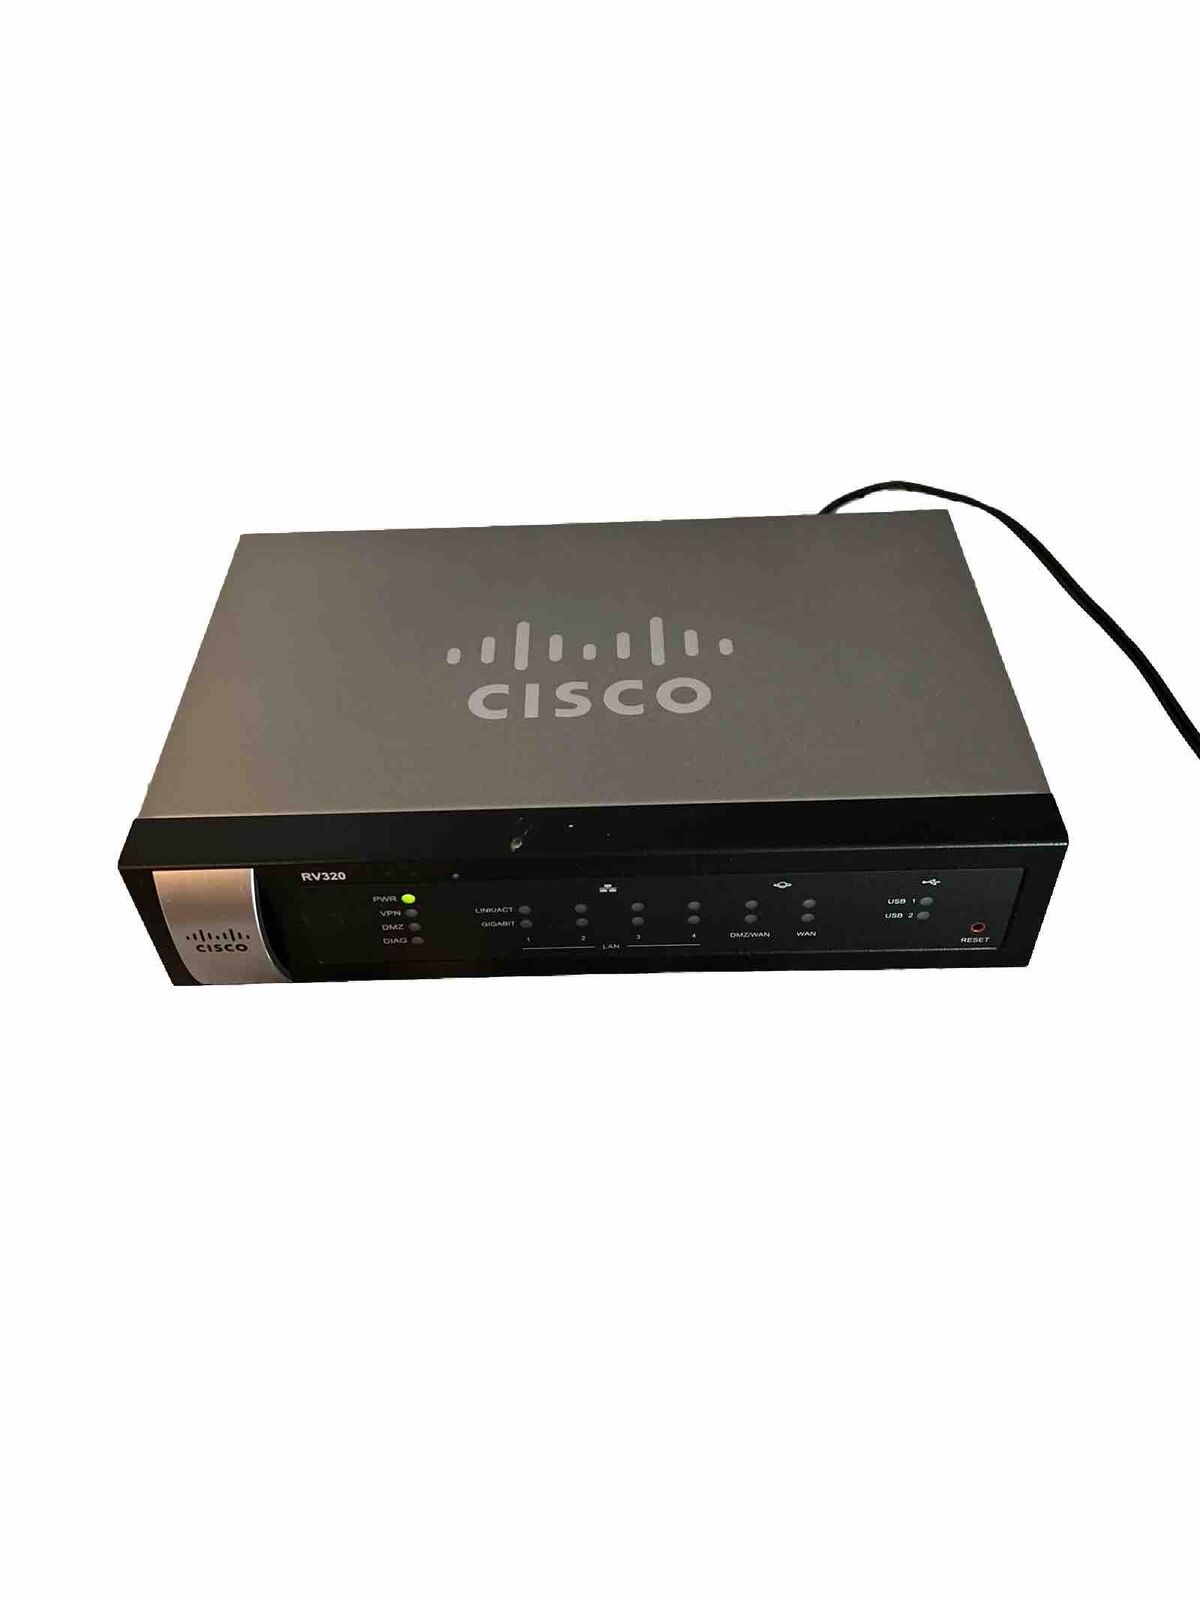 Cisco RV320 Dual Gigabit WAN VPN Router - Black